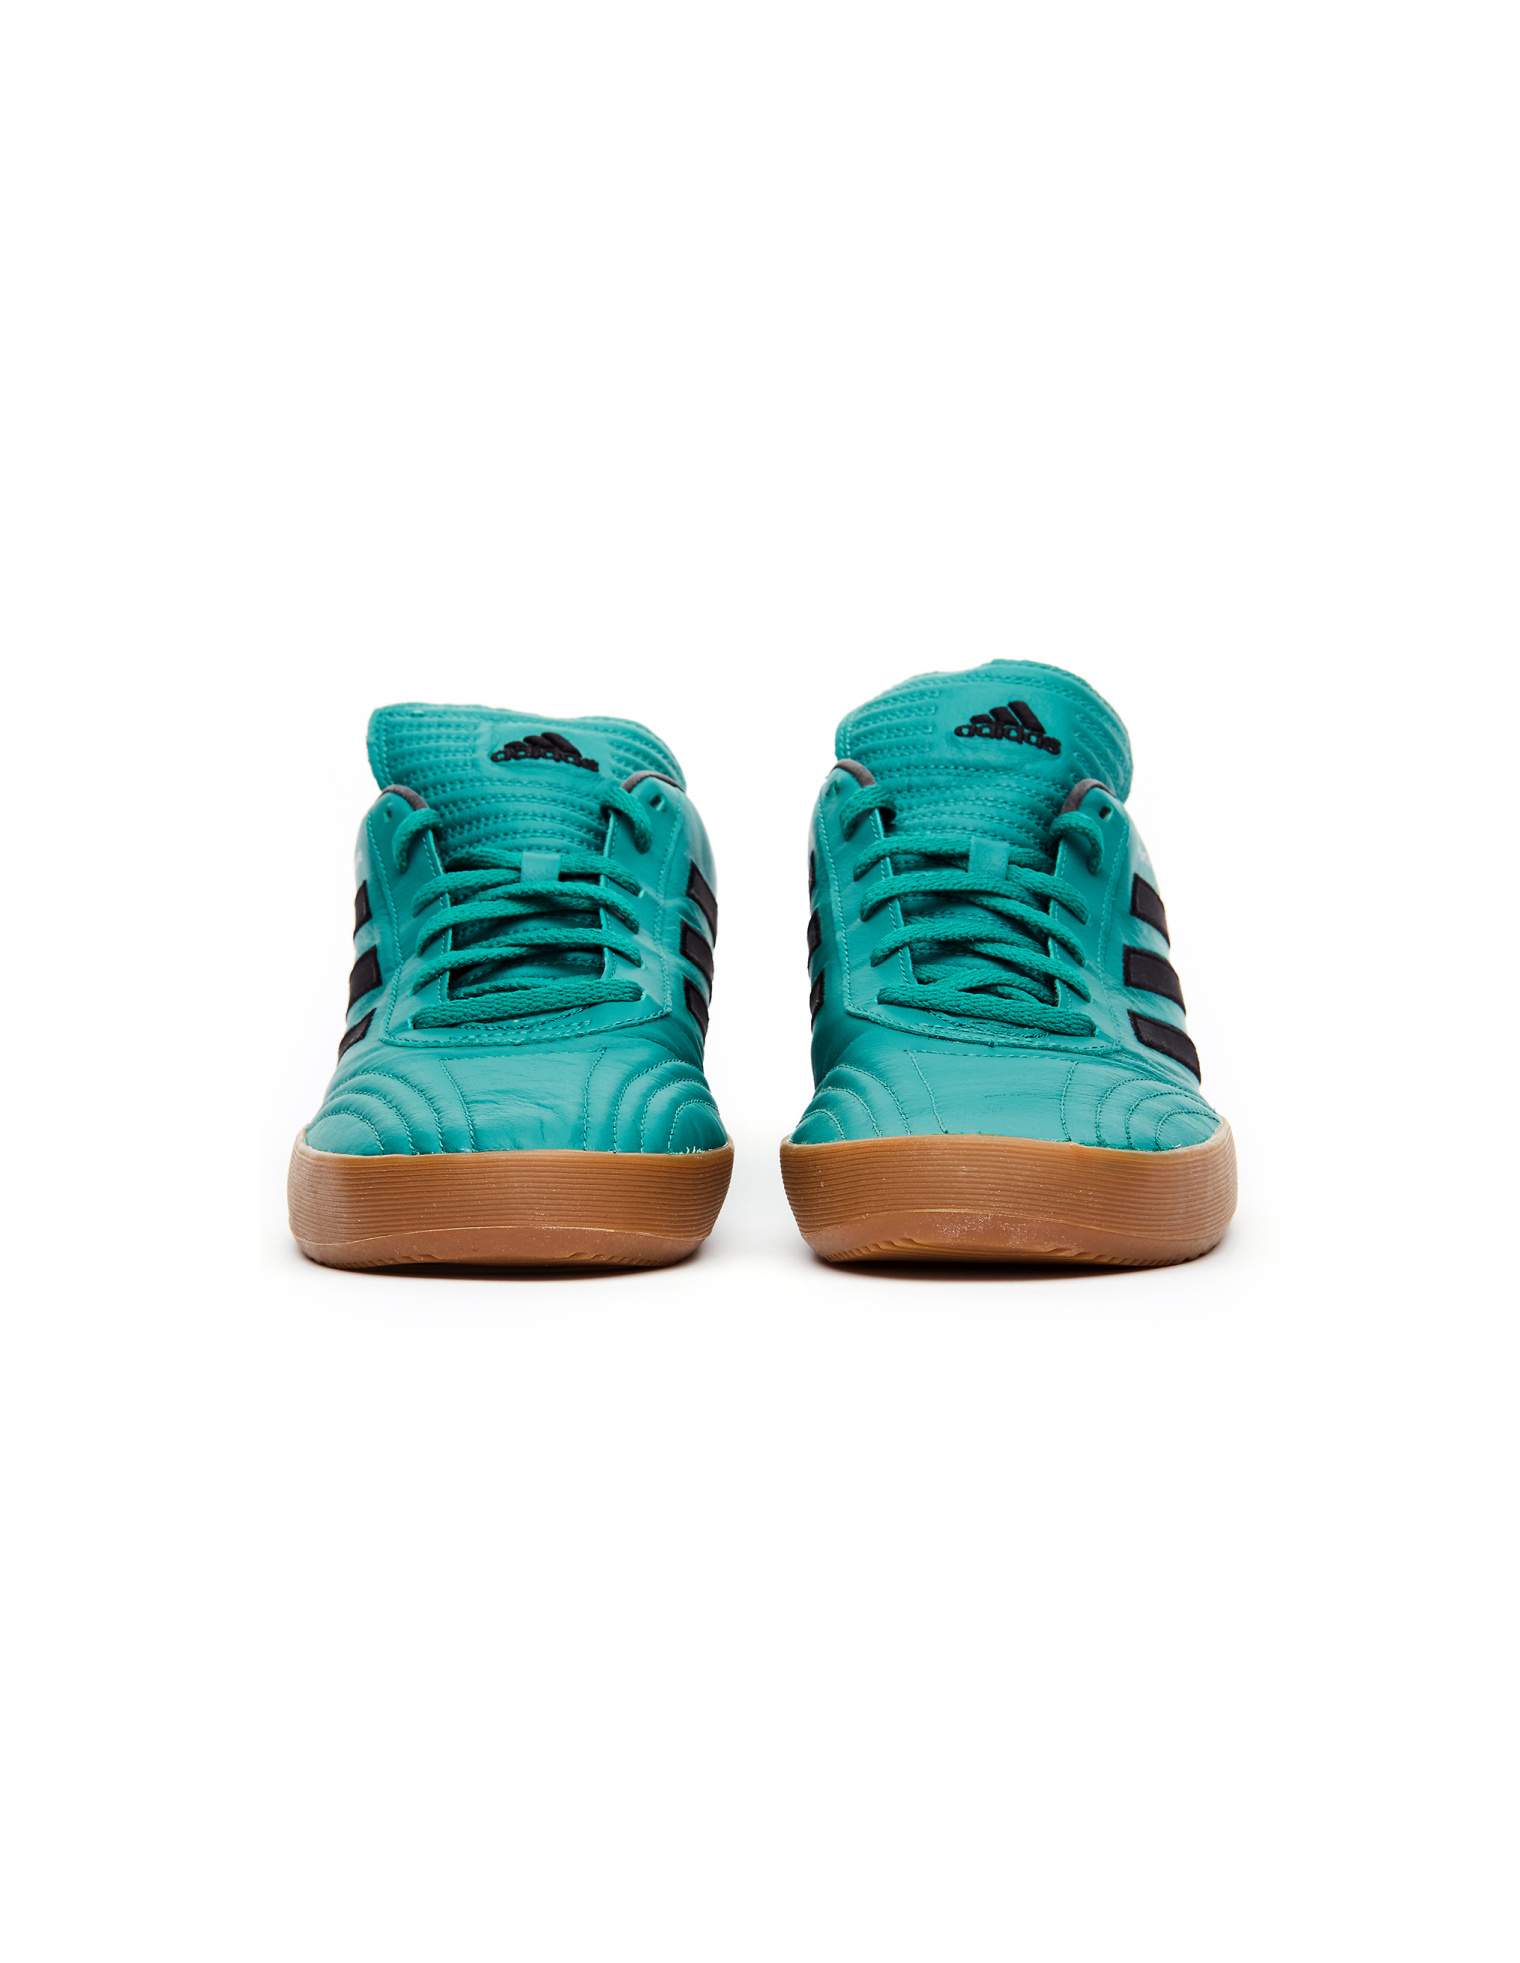 Gosha Rubchinskiy \'Copa Super\' Green Leather Sneakers